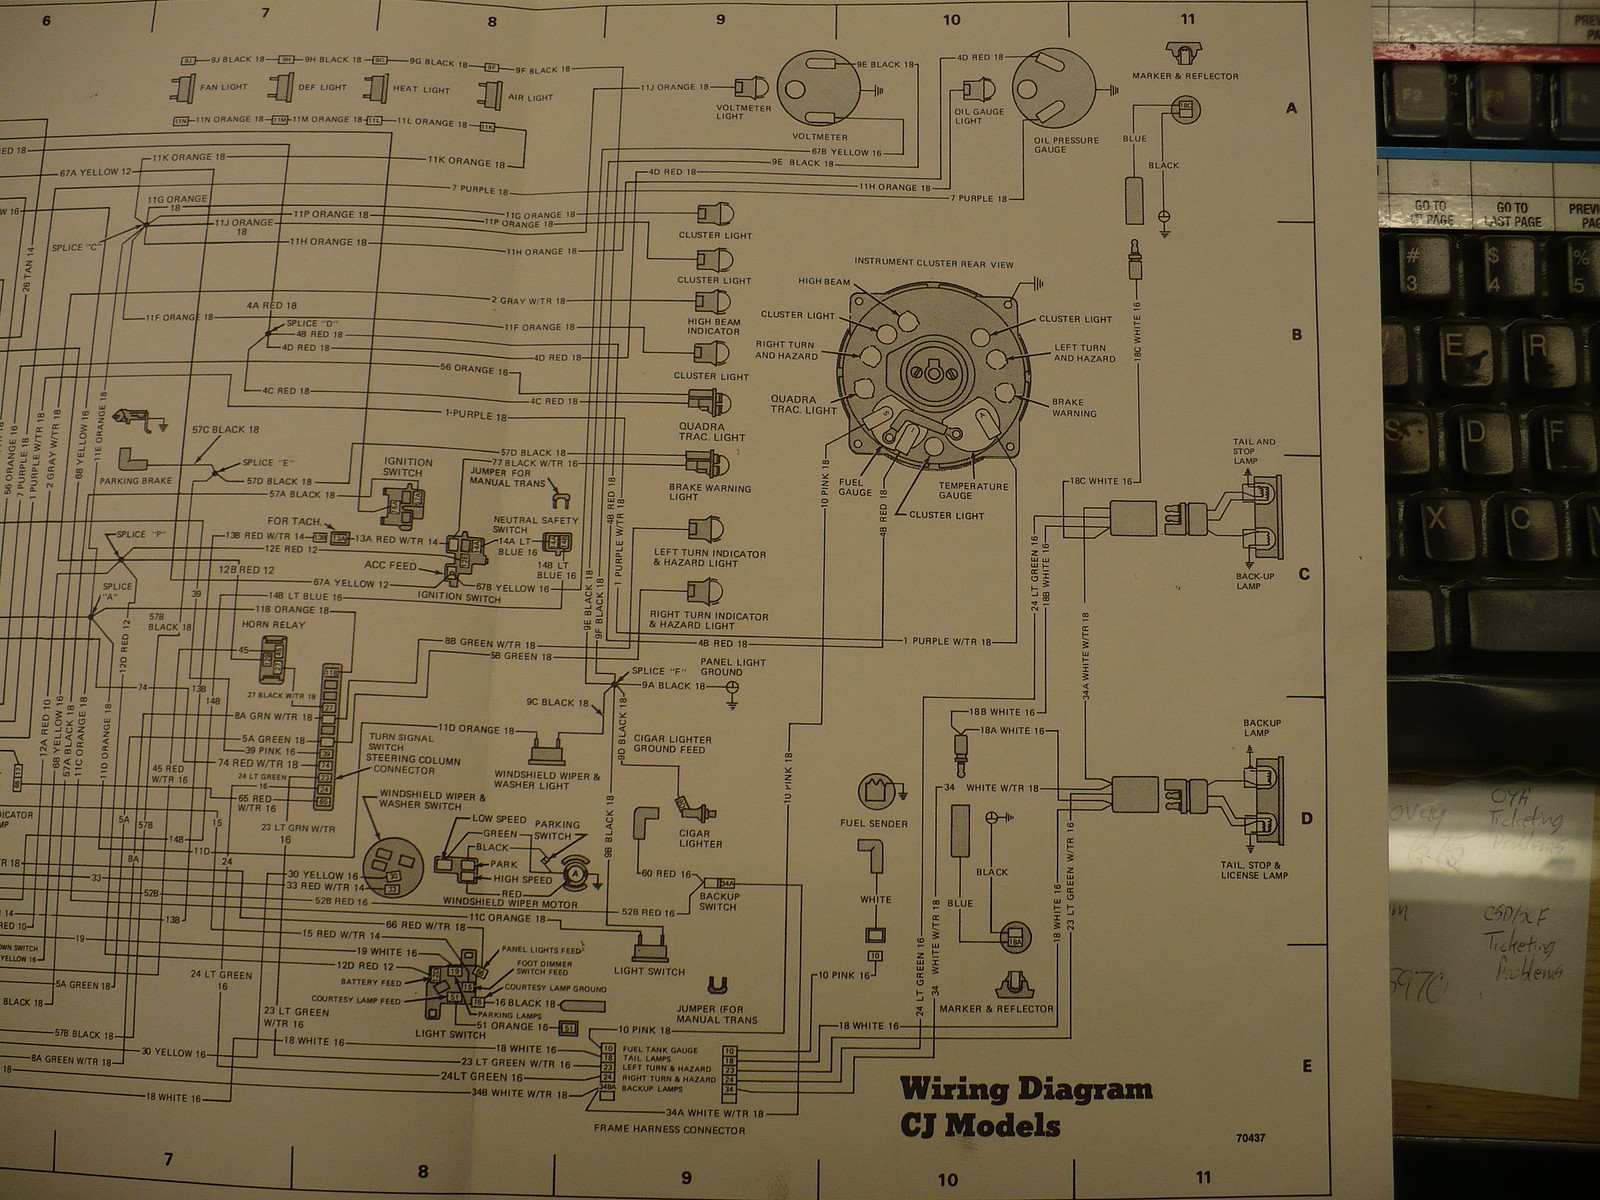 1978 cj 5 wiring diagram needed! - JeepForum.com